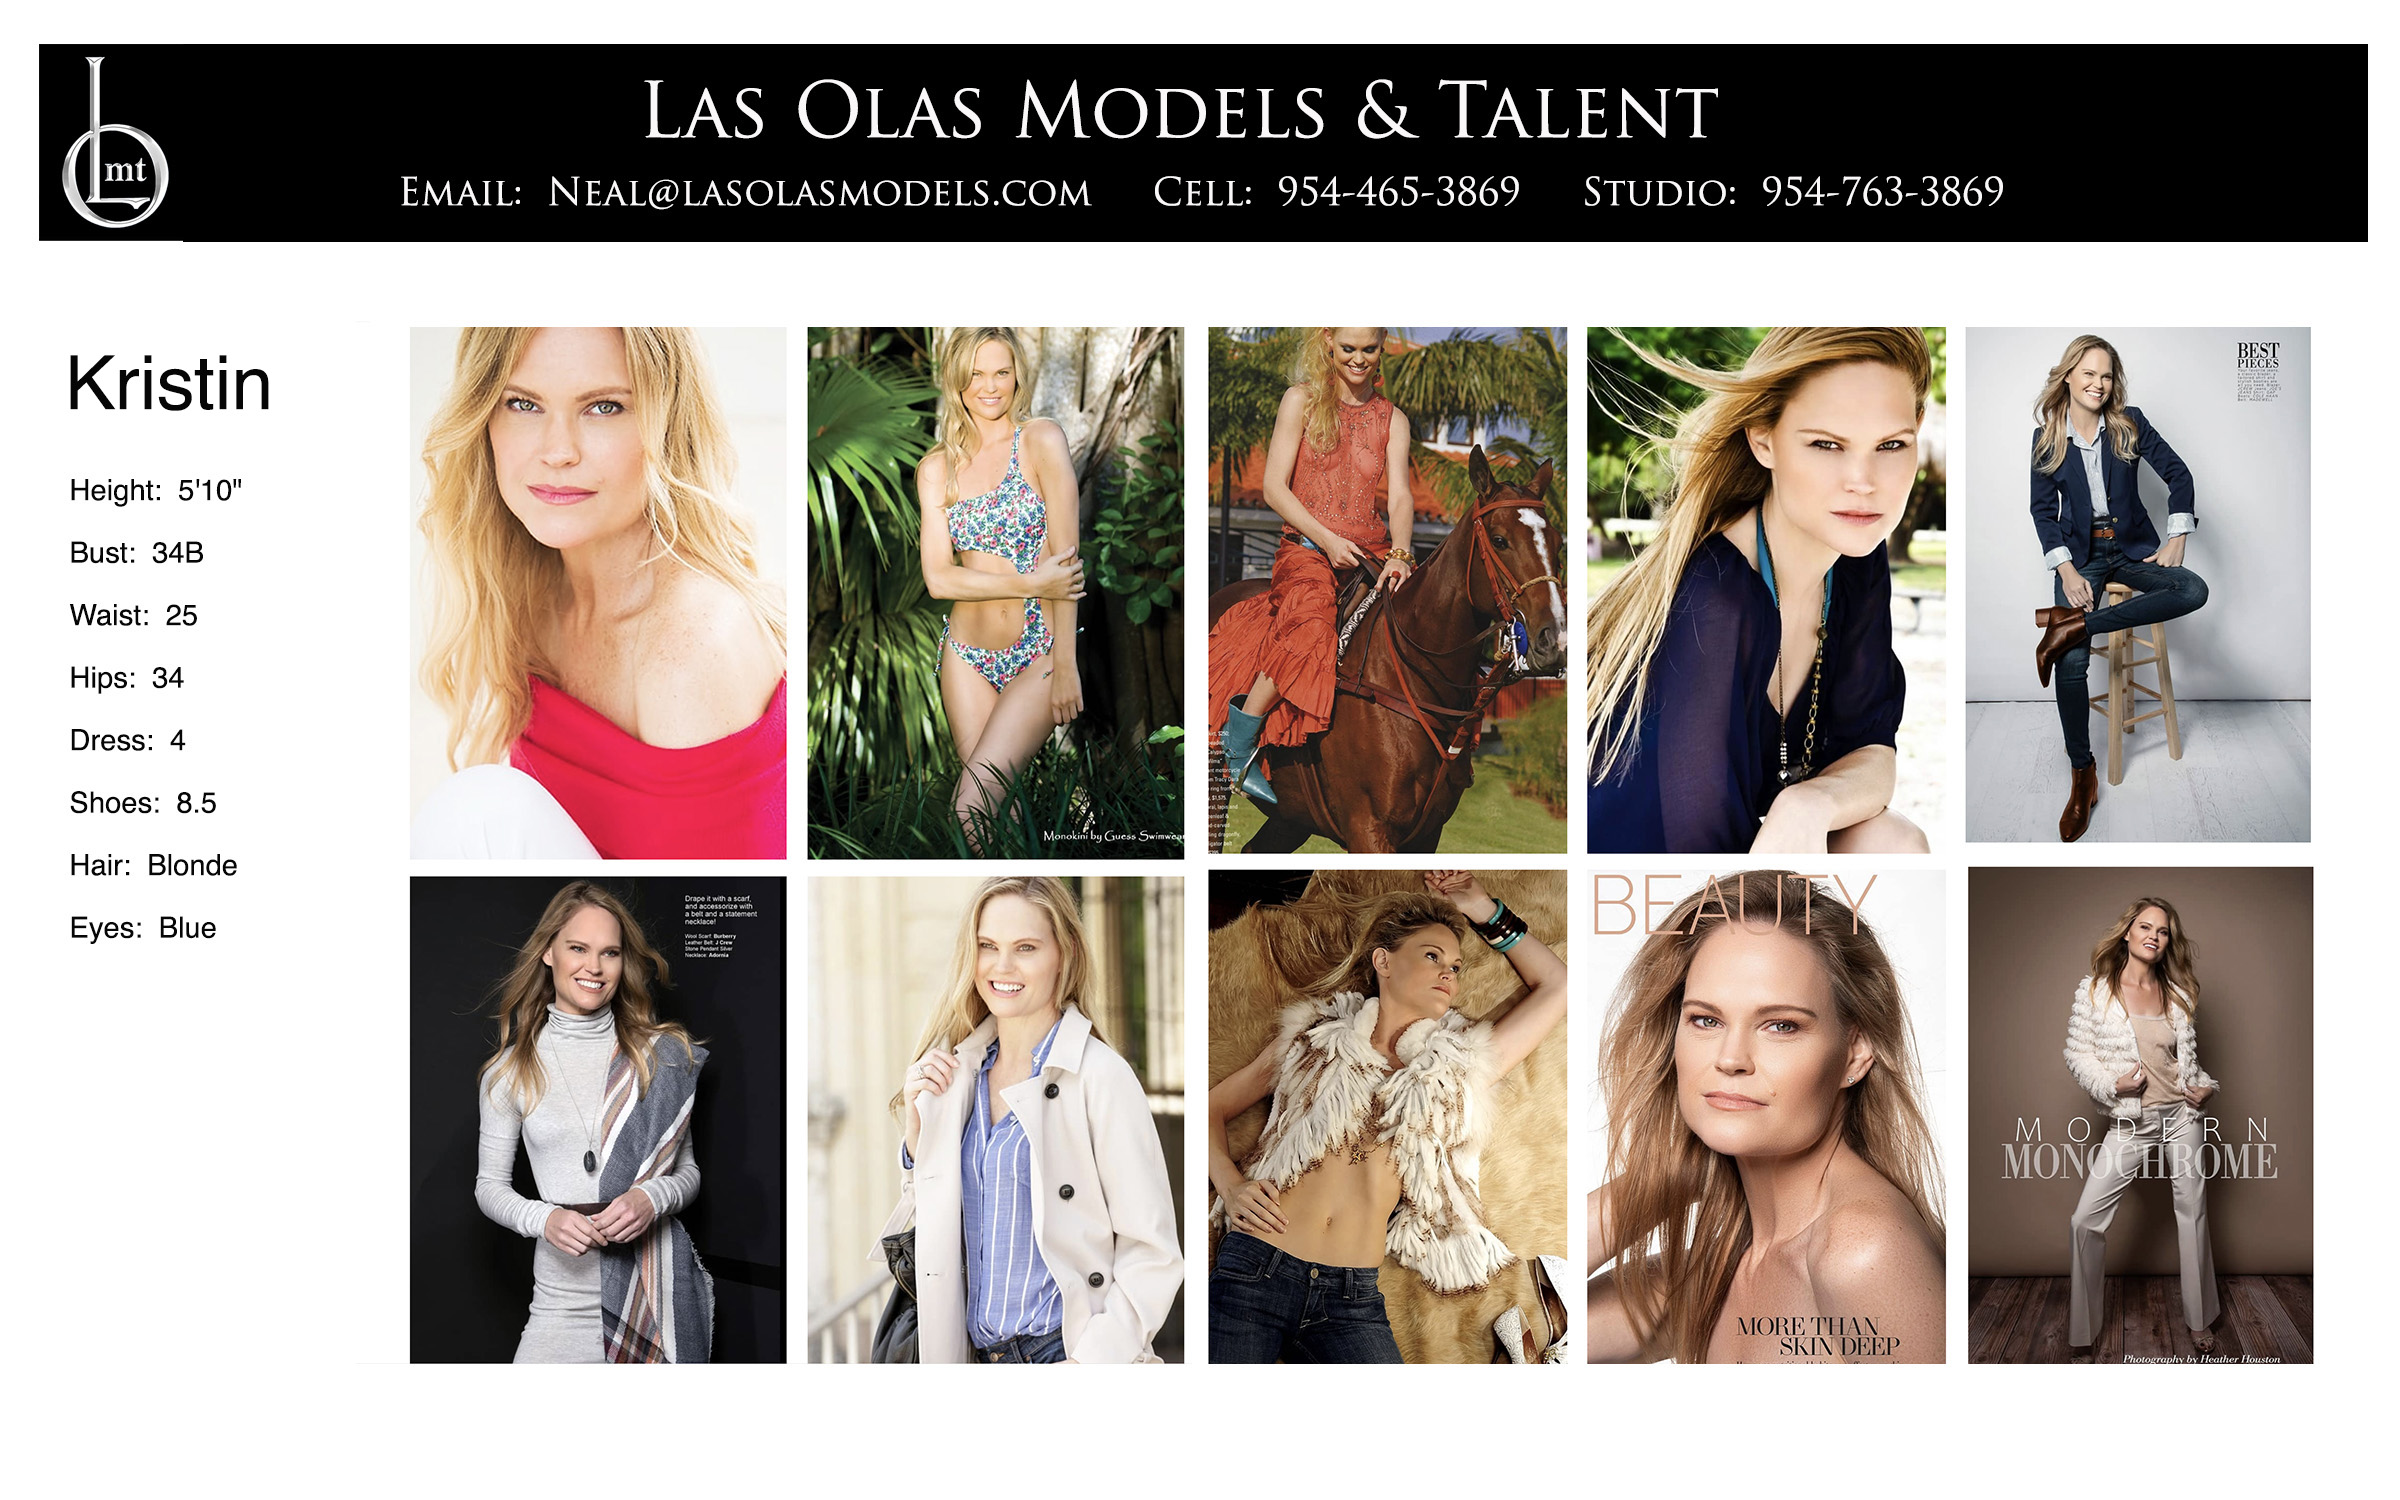 Models Fort Lauderdale Miami South Florida - Print Video Commercial Catalog - Las Olas Models & Talent - Kristin Comp